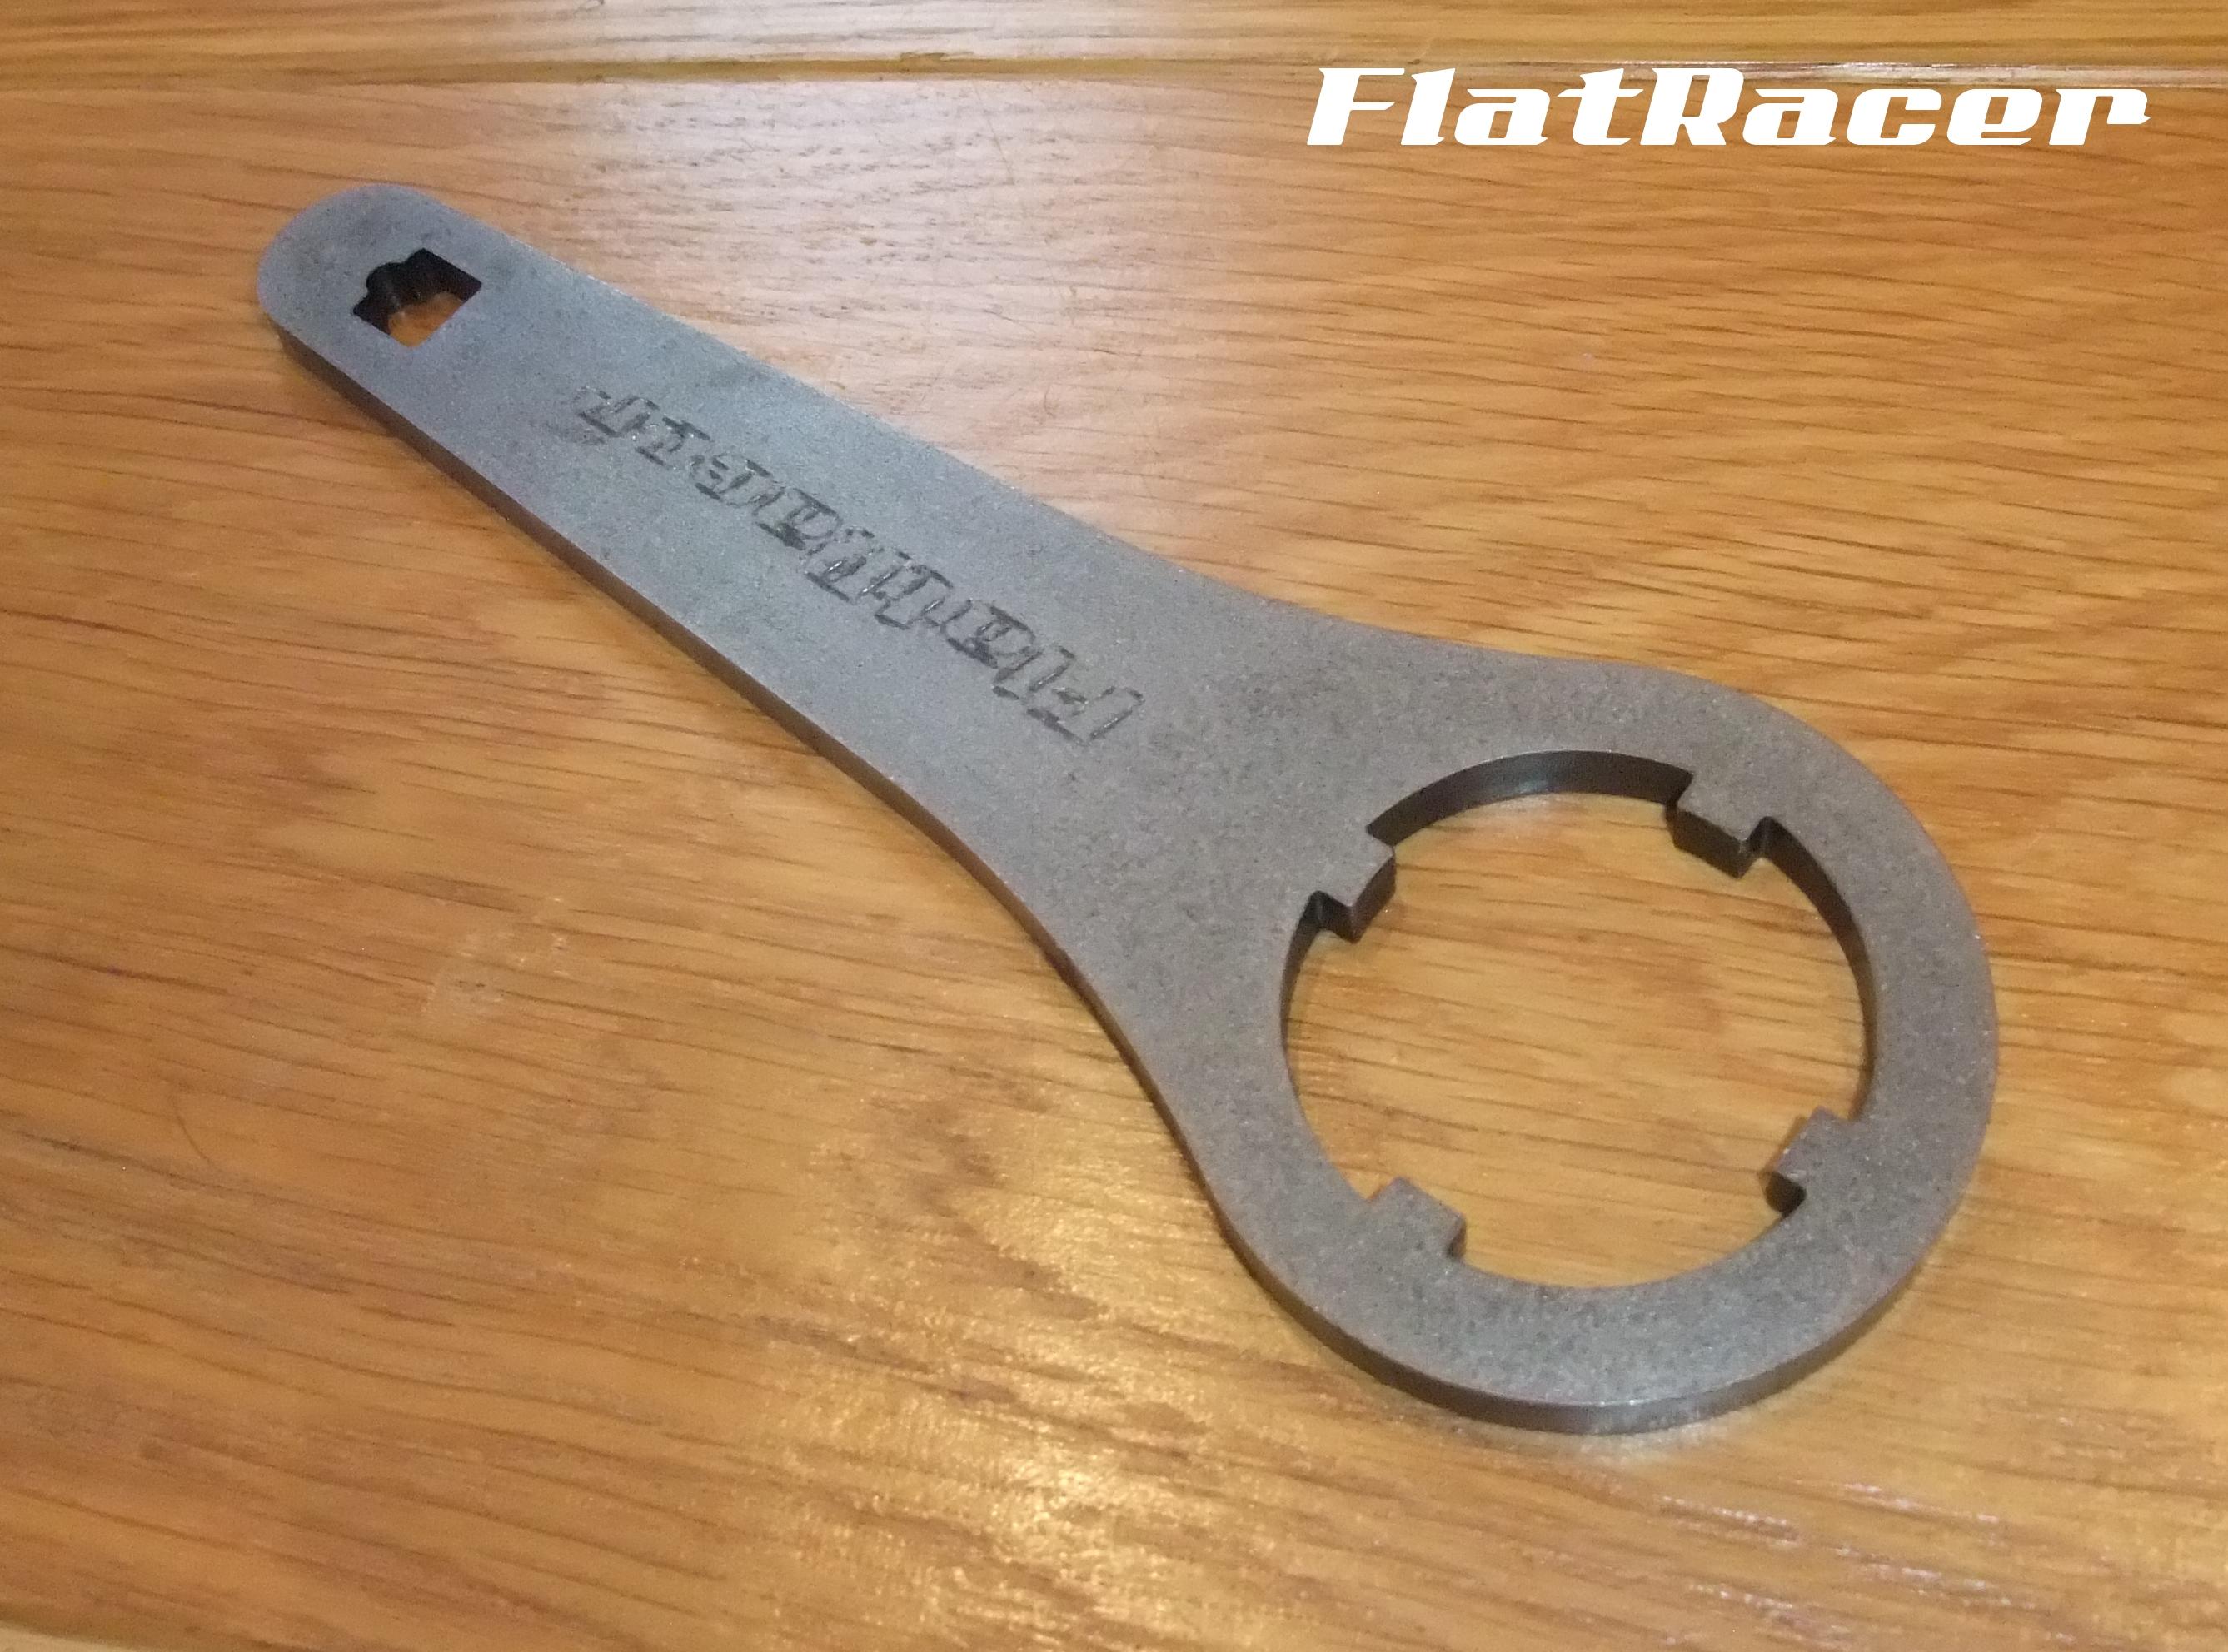 FlatRacer BMW Airhead Boxer steering bearing adjuster spanner tool